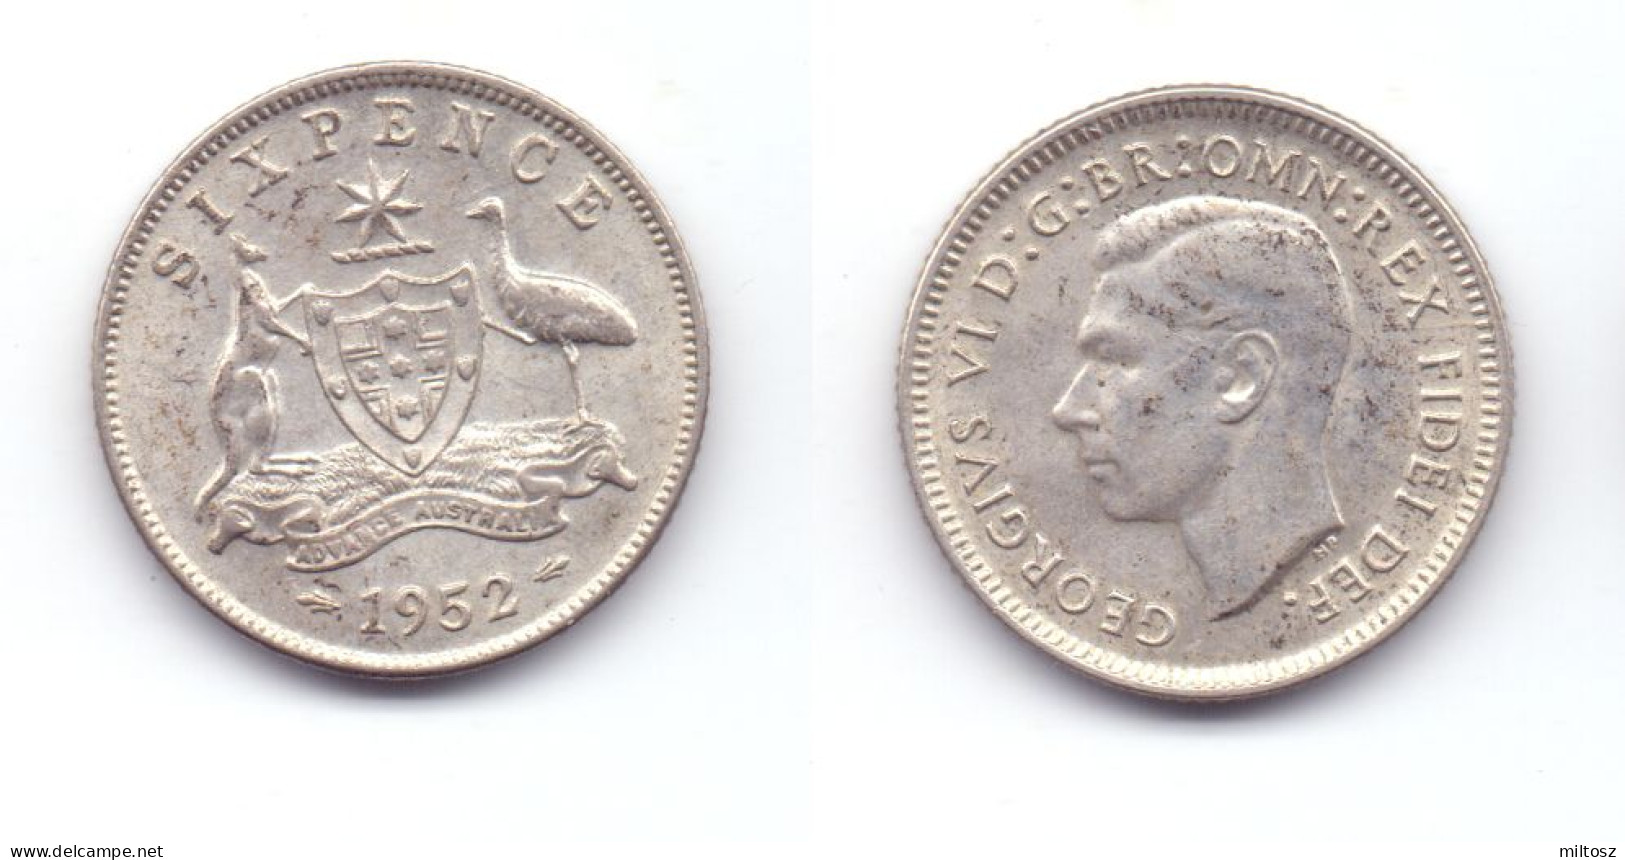 Australia 6 Pence 1952 - Sixpence